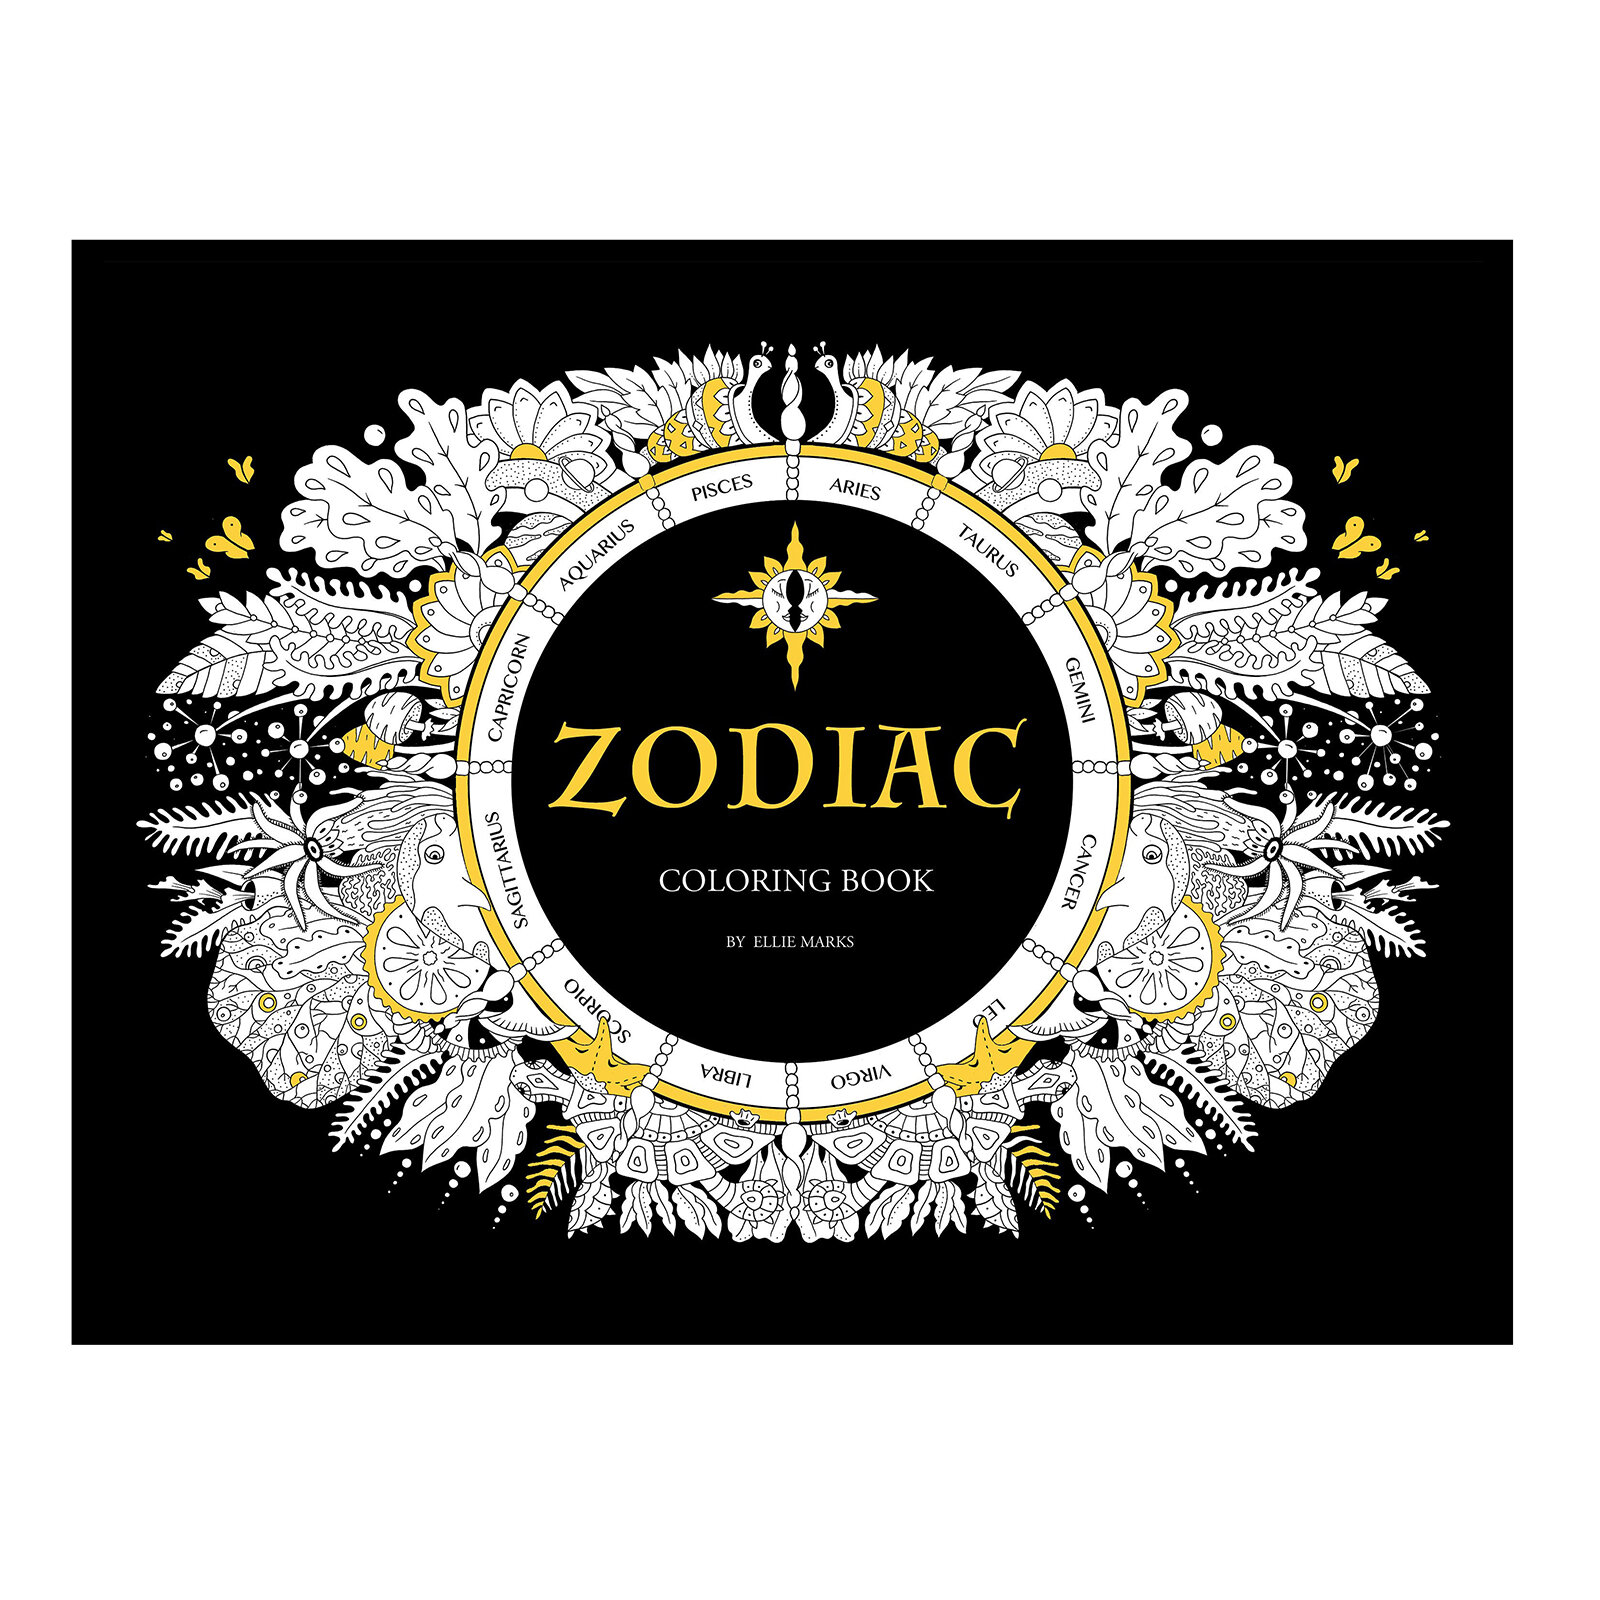 Zodiac Coloring Book, Ellie Marks, $6.95